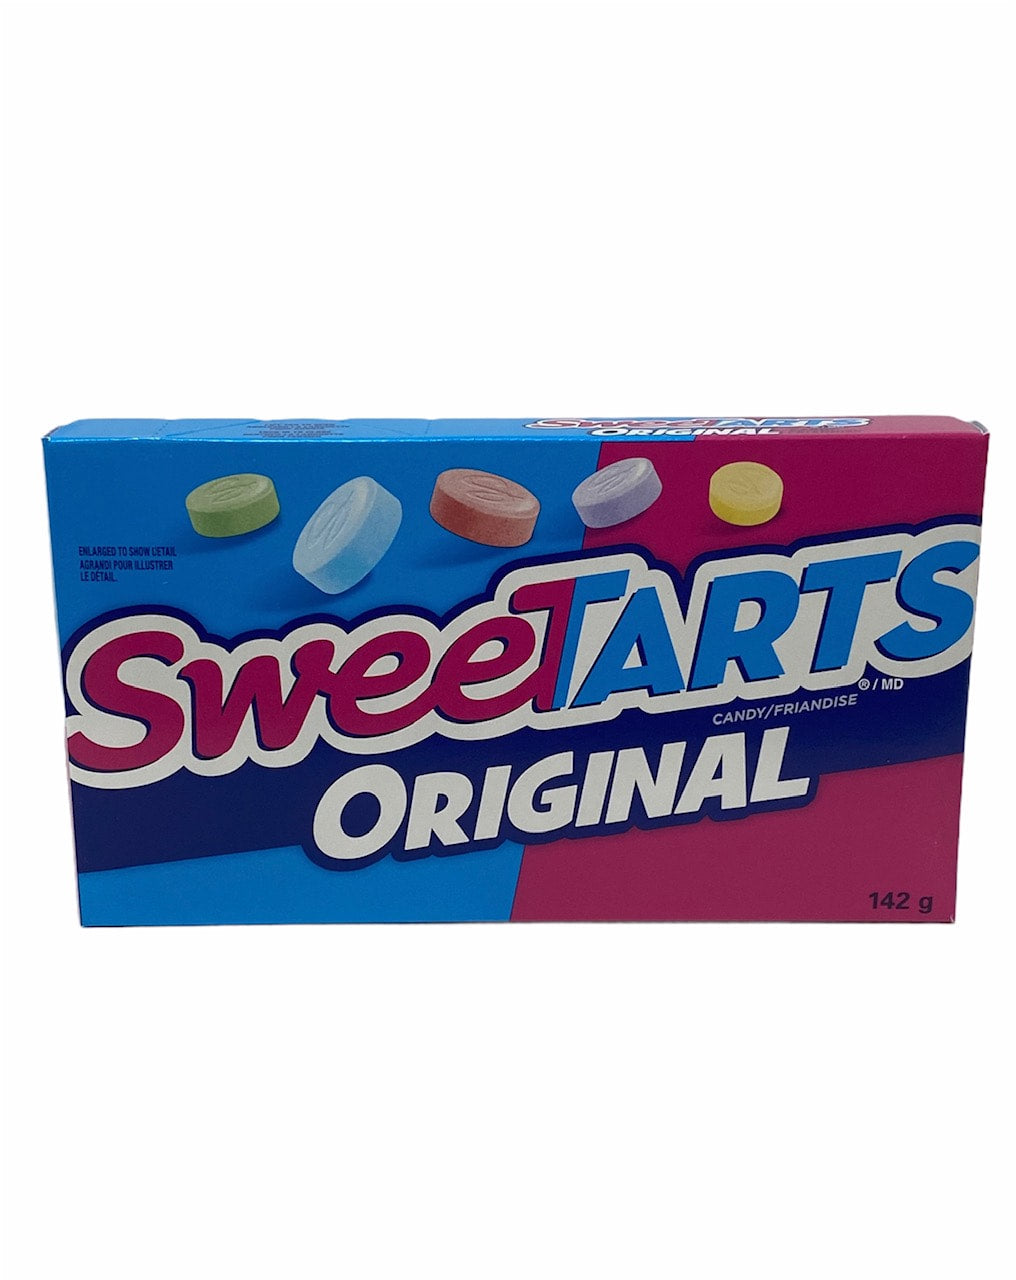 Sweetarts Original Theatre Box - 141g